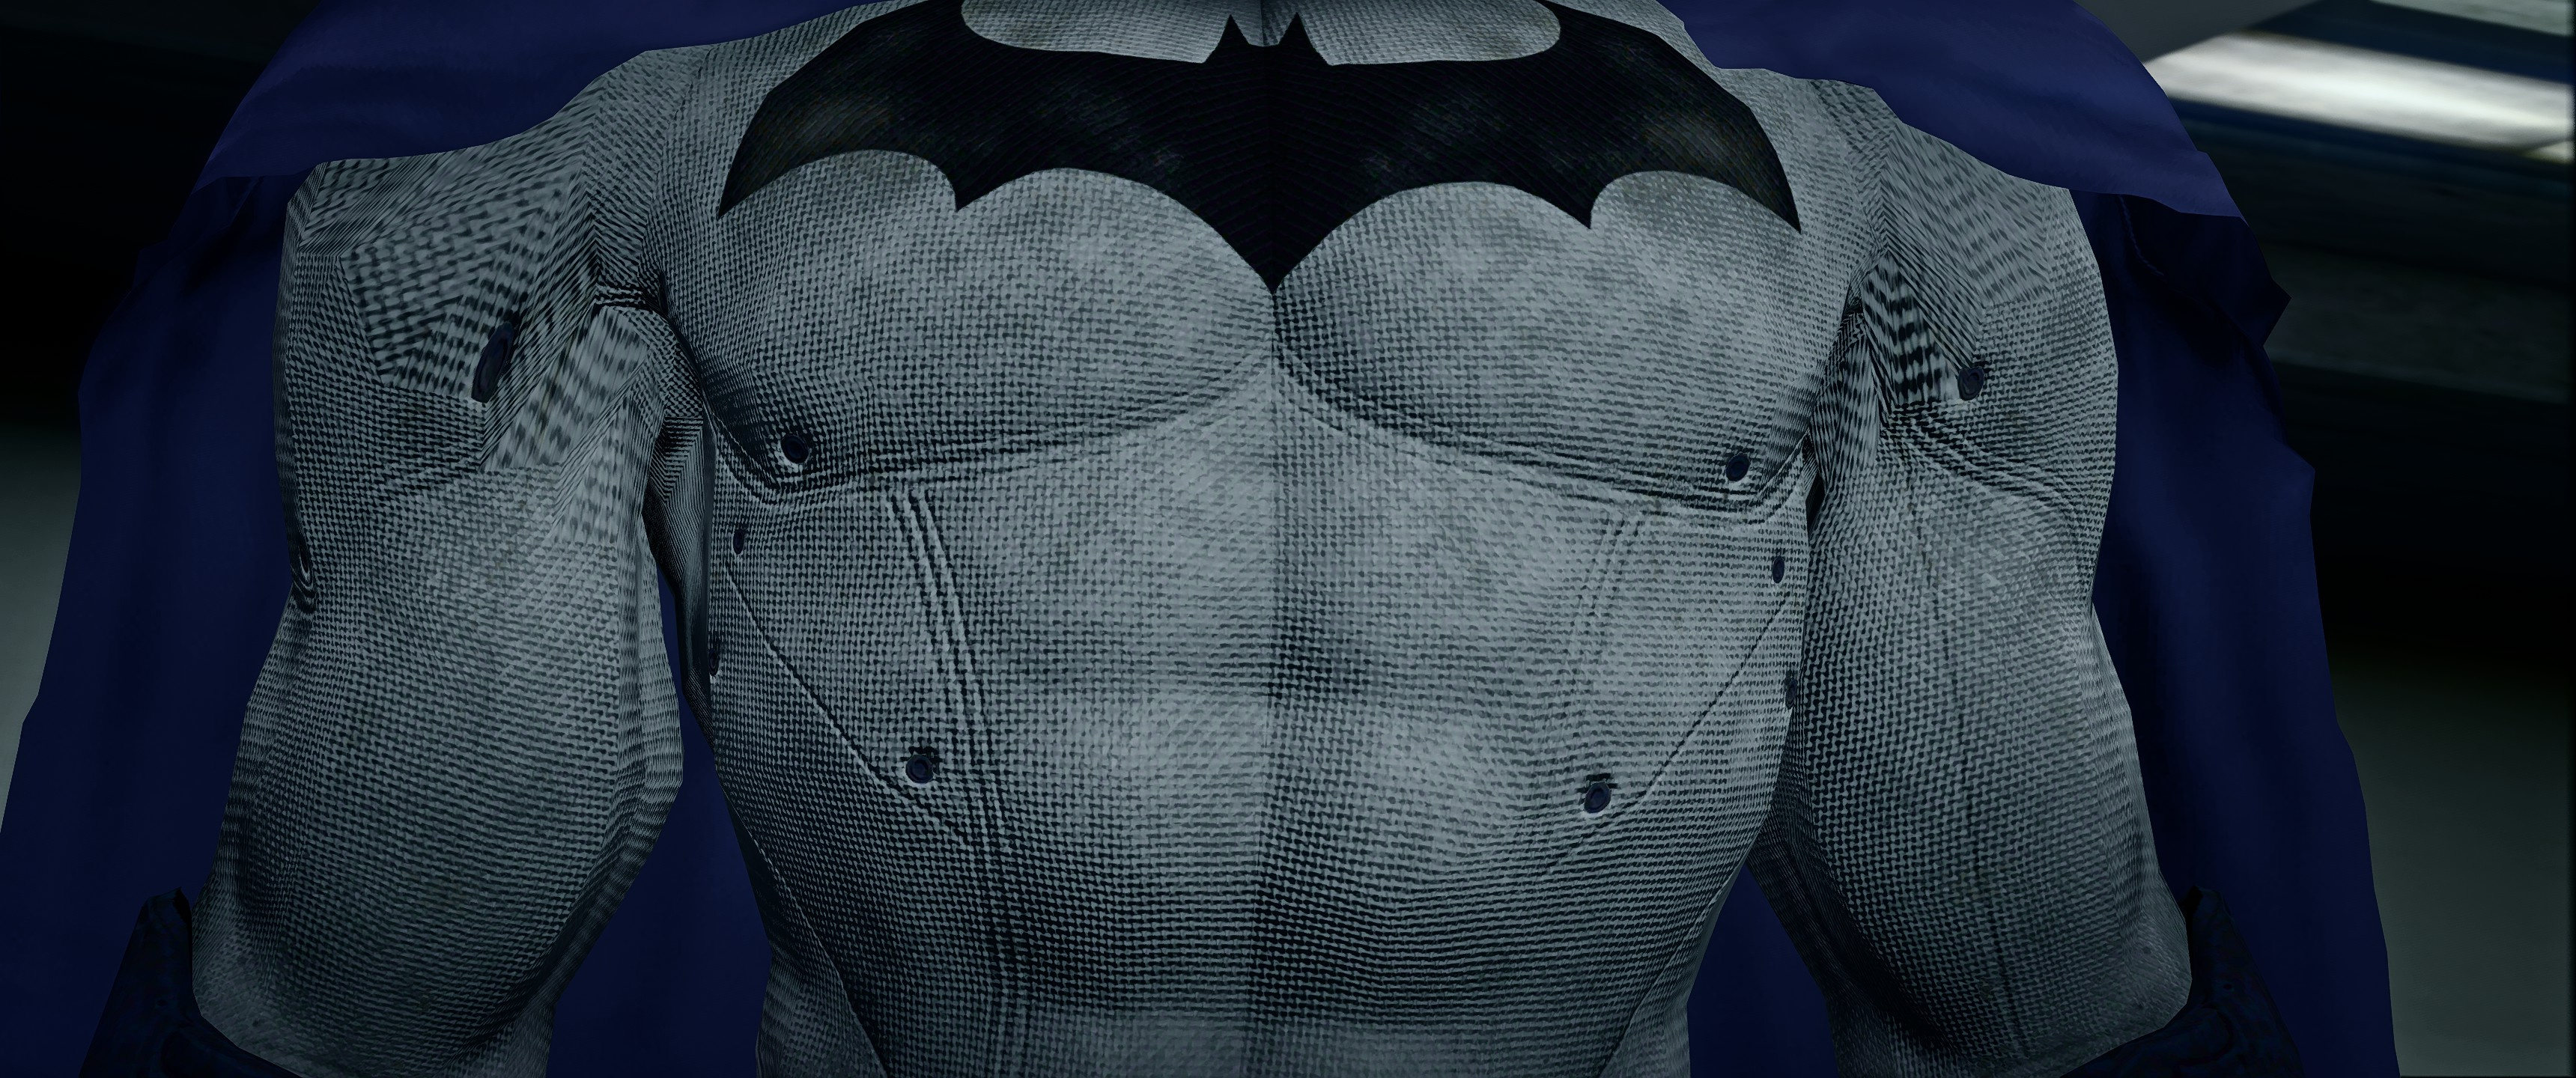 BAK Batman Arkham A/C [Add-On] 